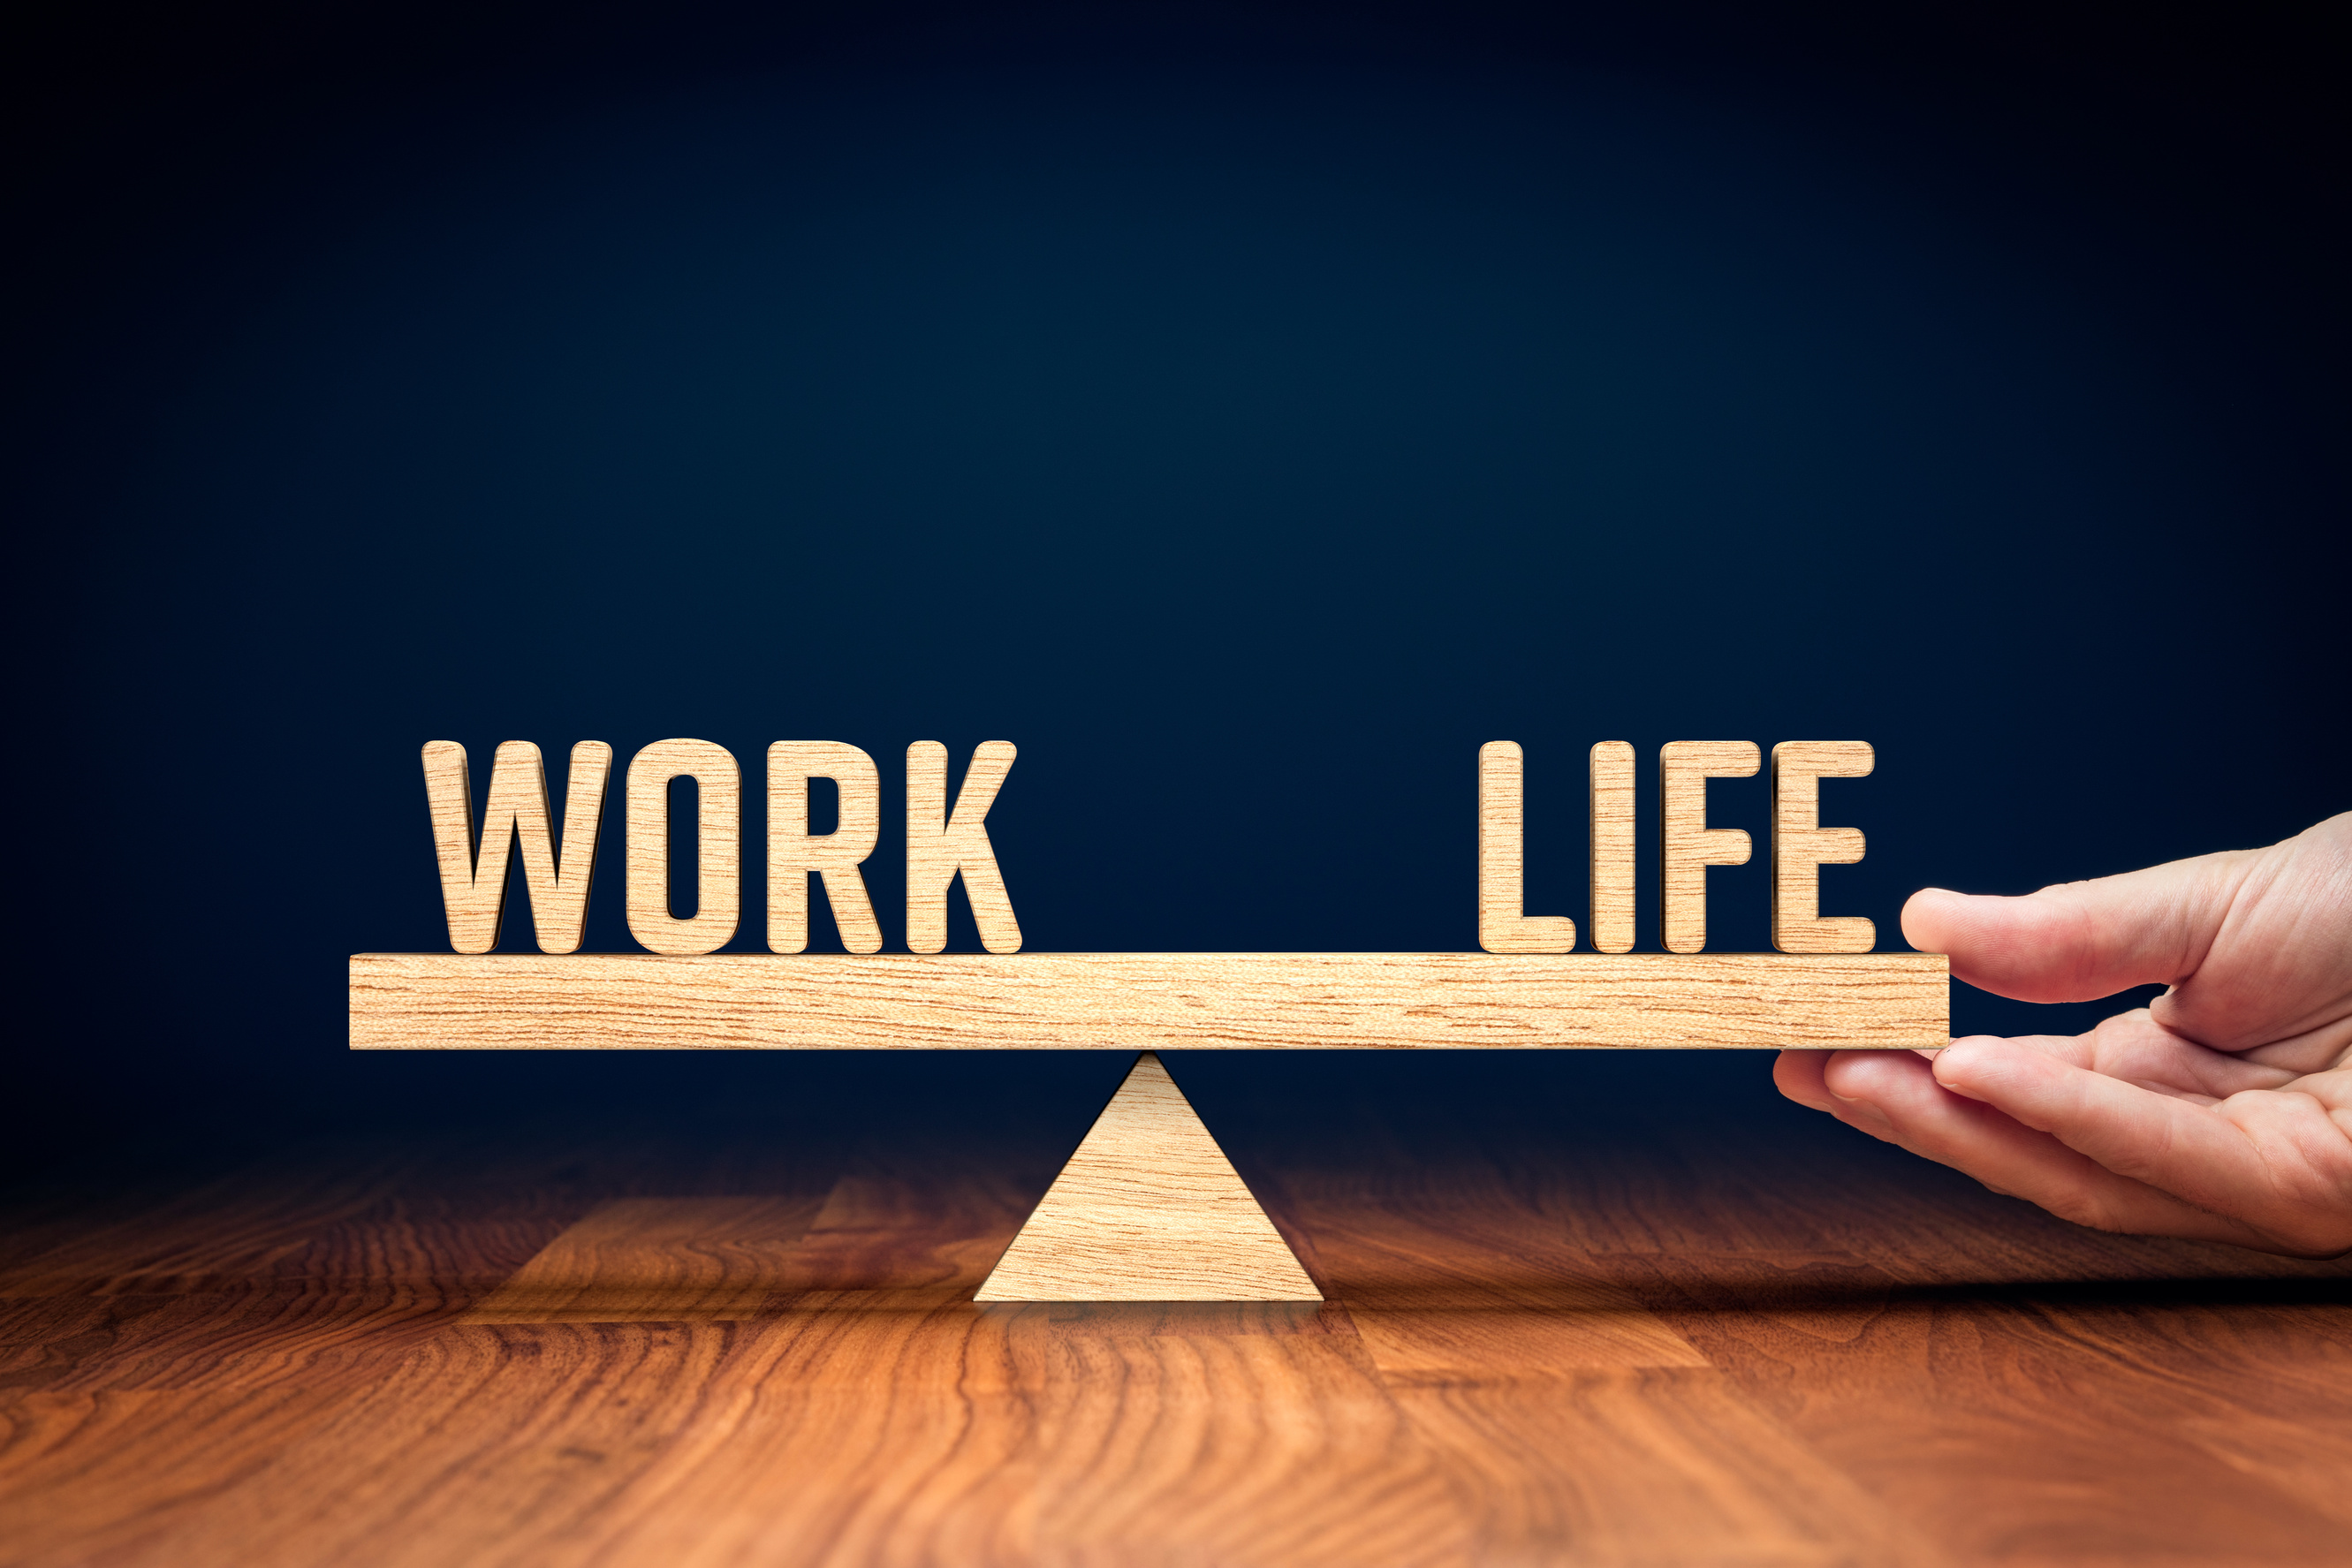 Work life balance concept